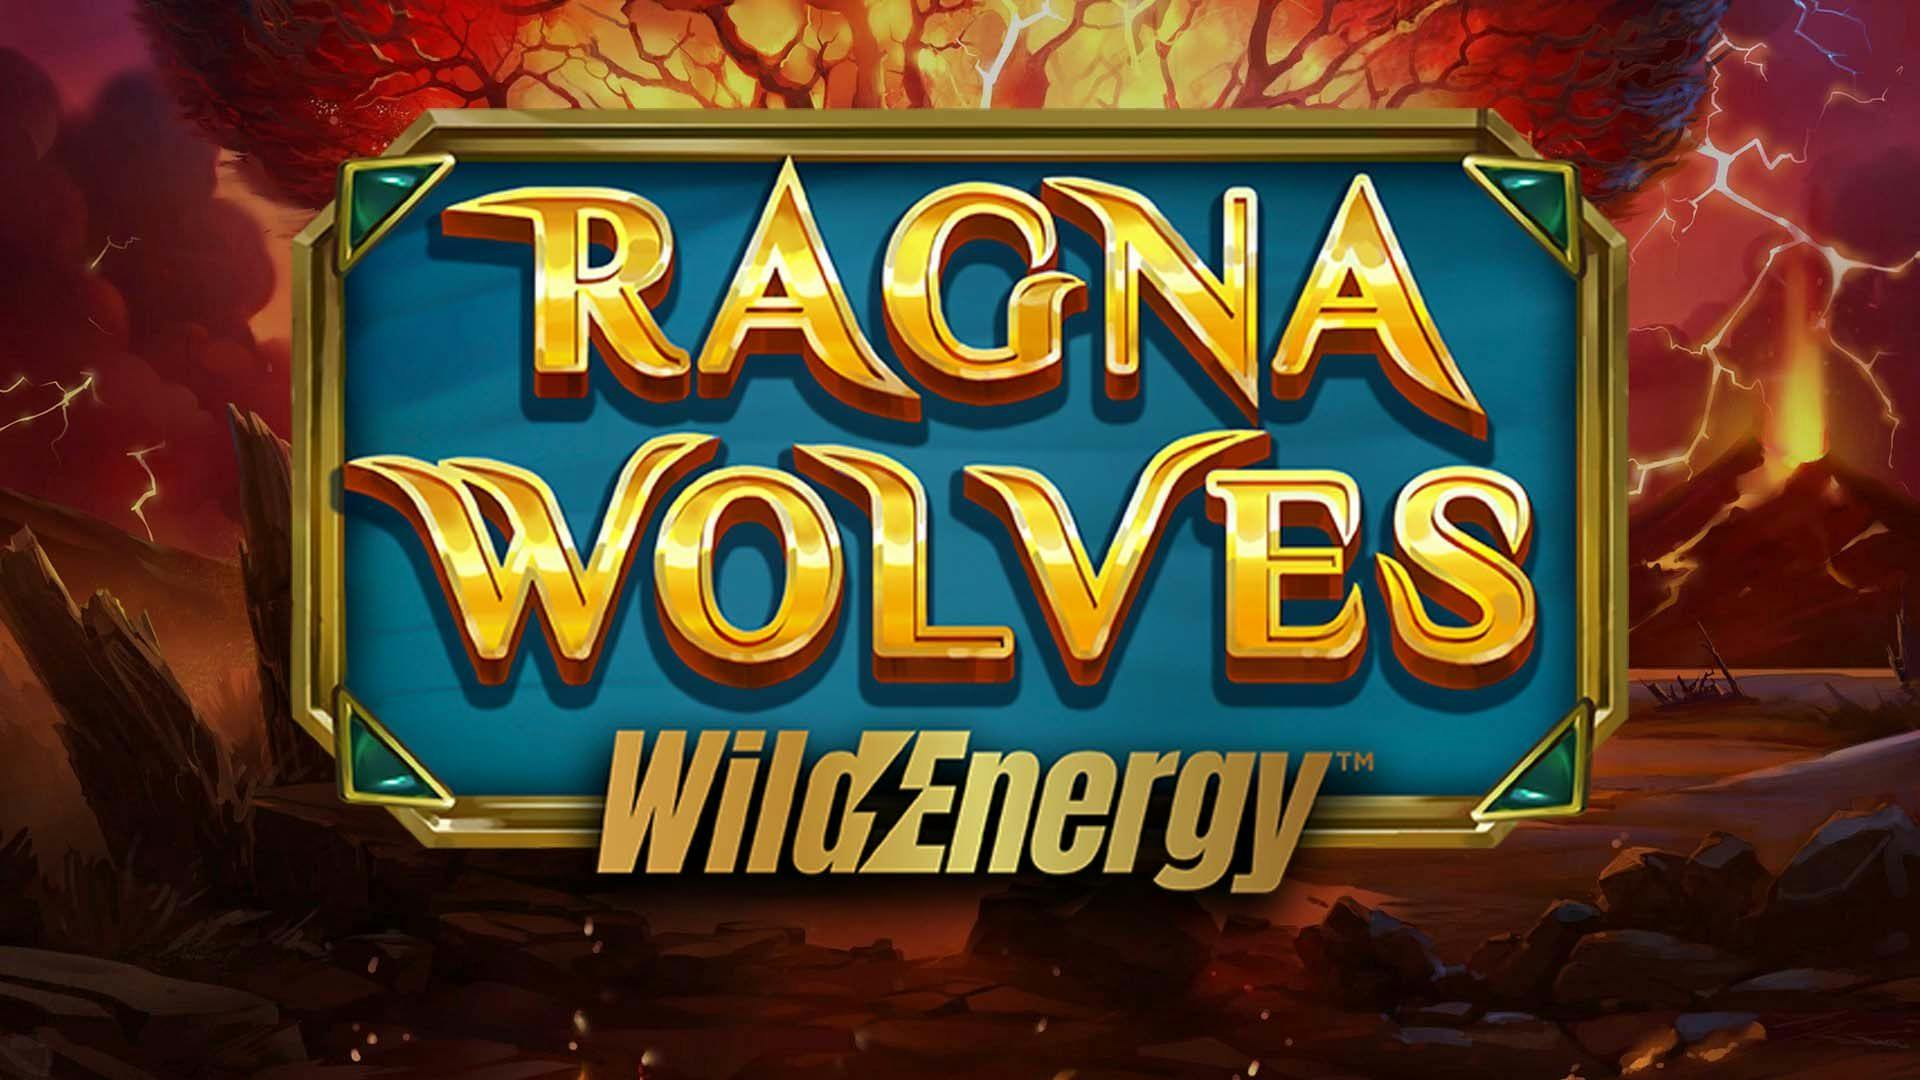 RagnaWolves WildEnergy Slot Machine Online Free Game Play